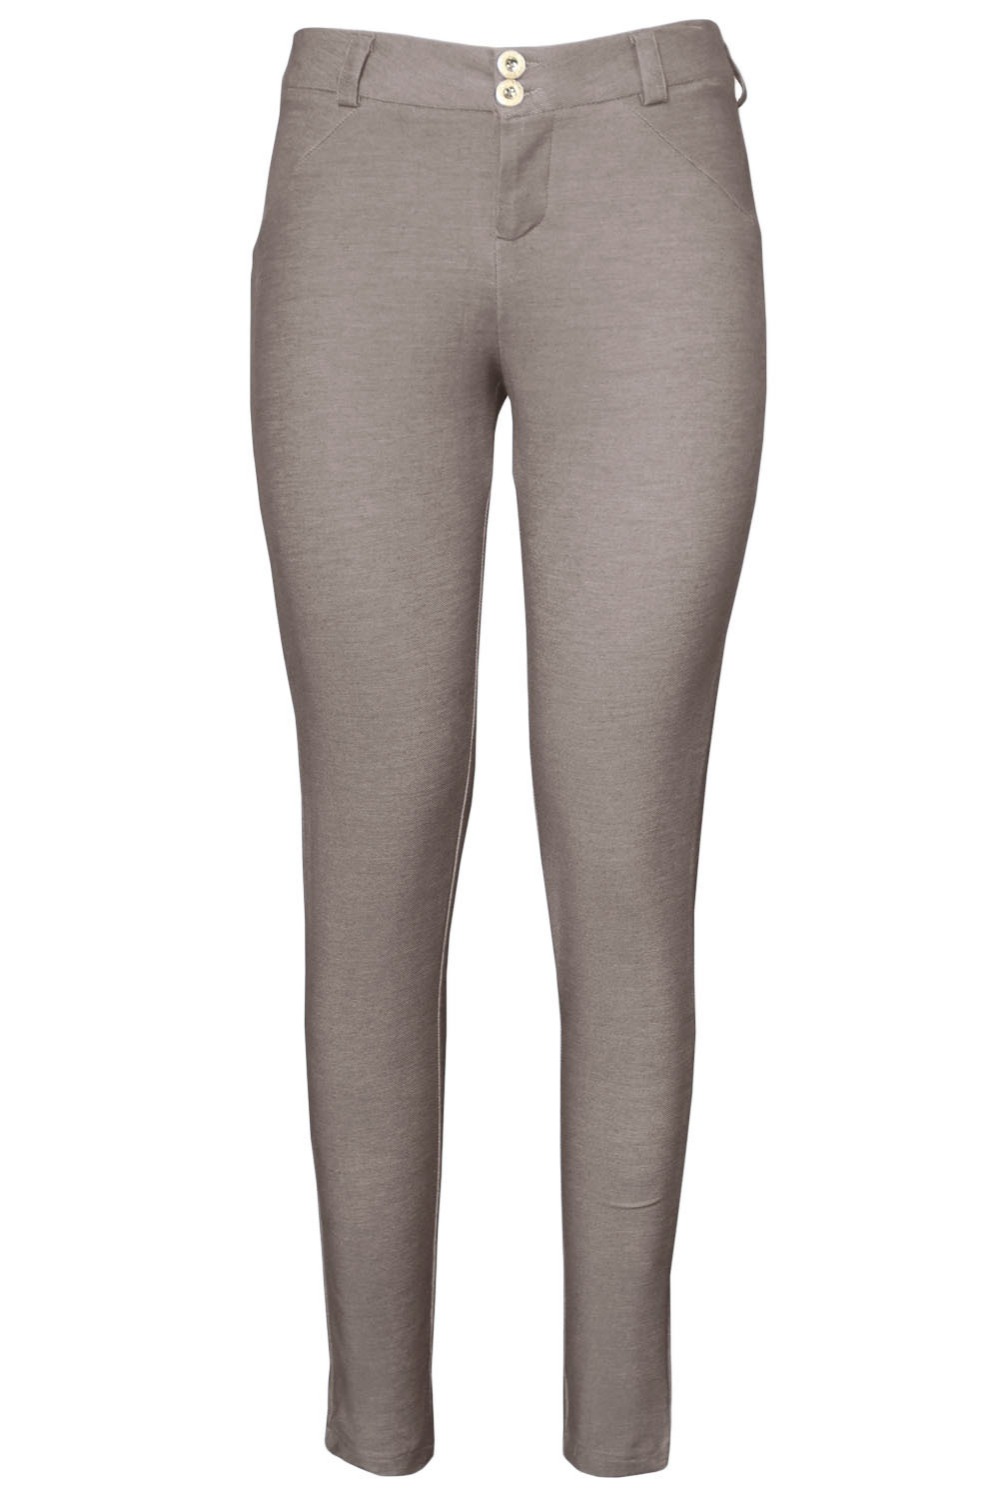 Fashion women Elegant gray pockets Stretch ZIpper pencil pants casual fit brand design